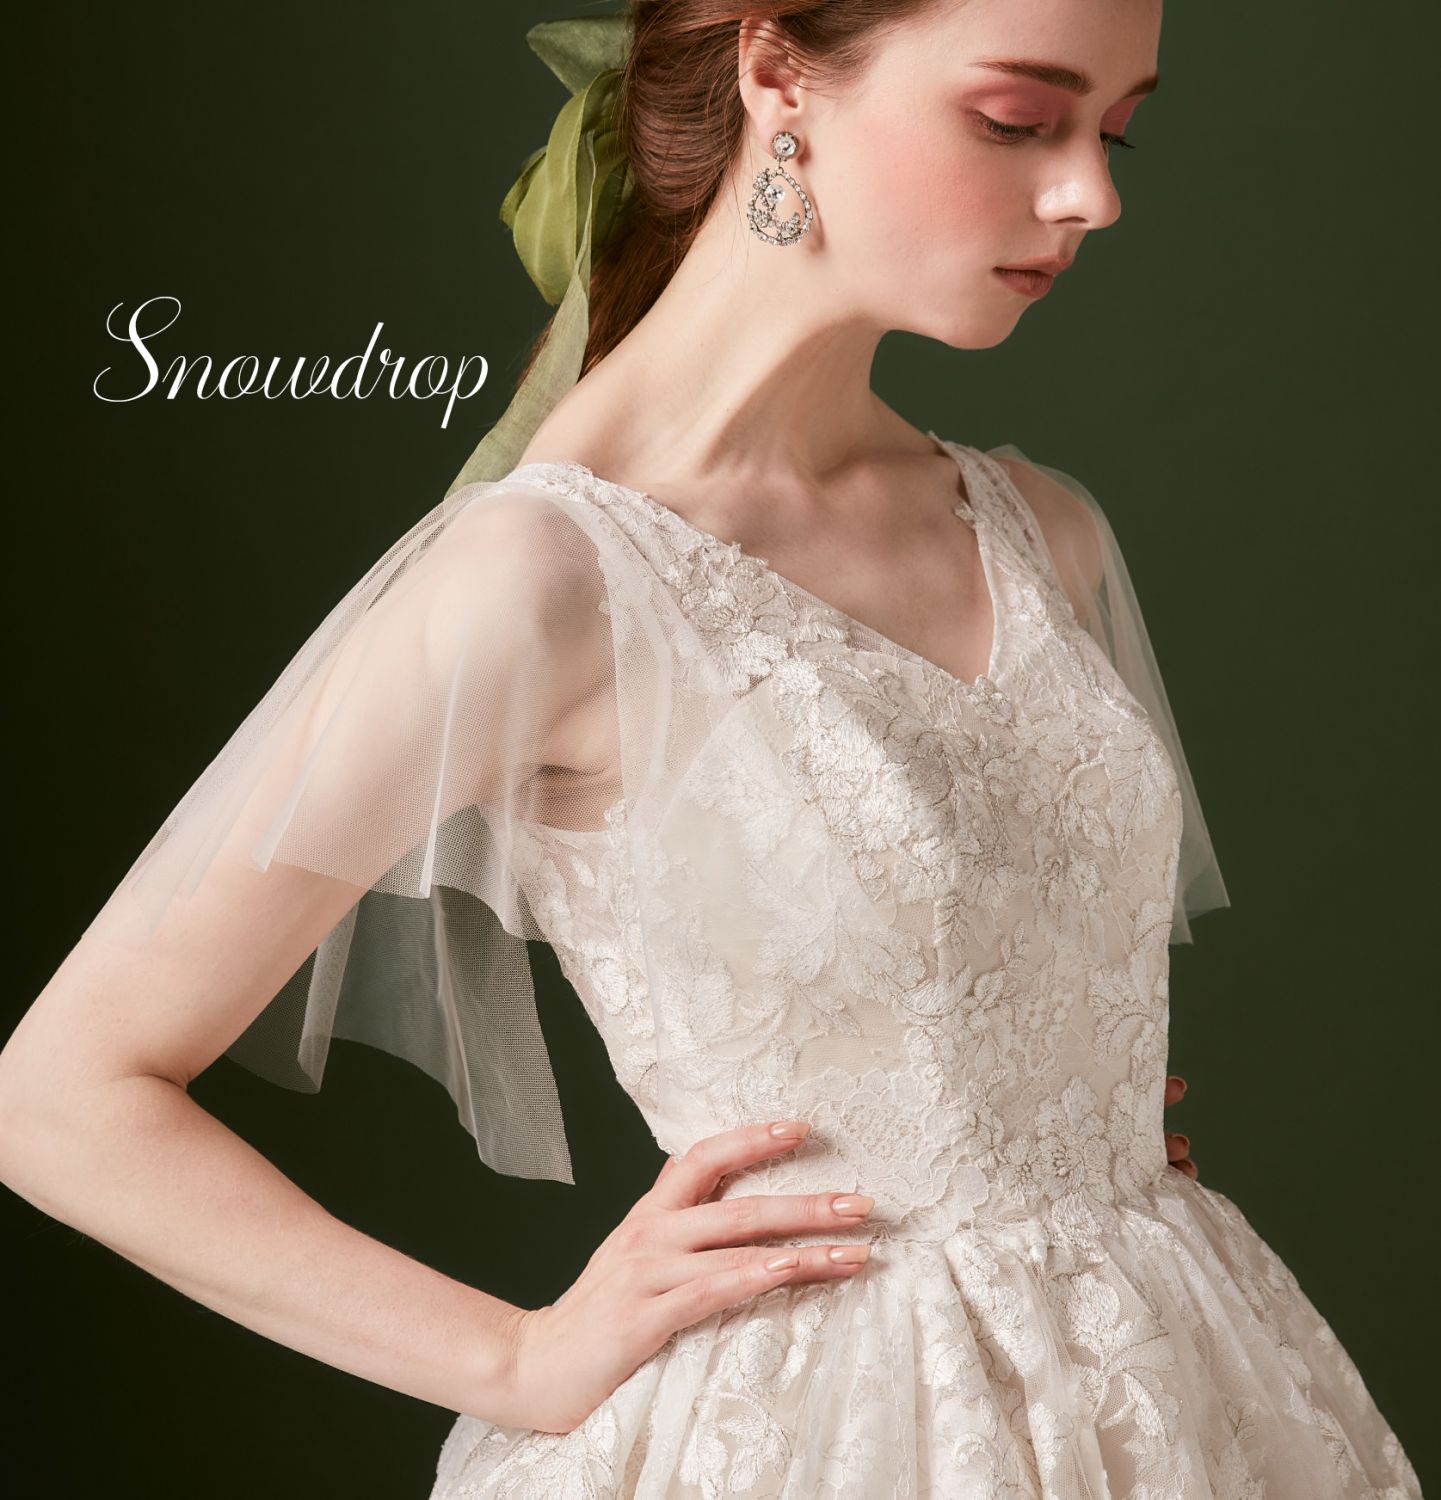 snowdrop ウェディングドレス